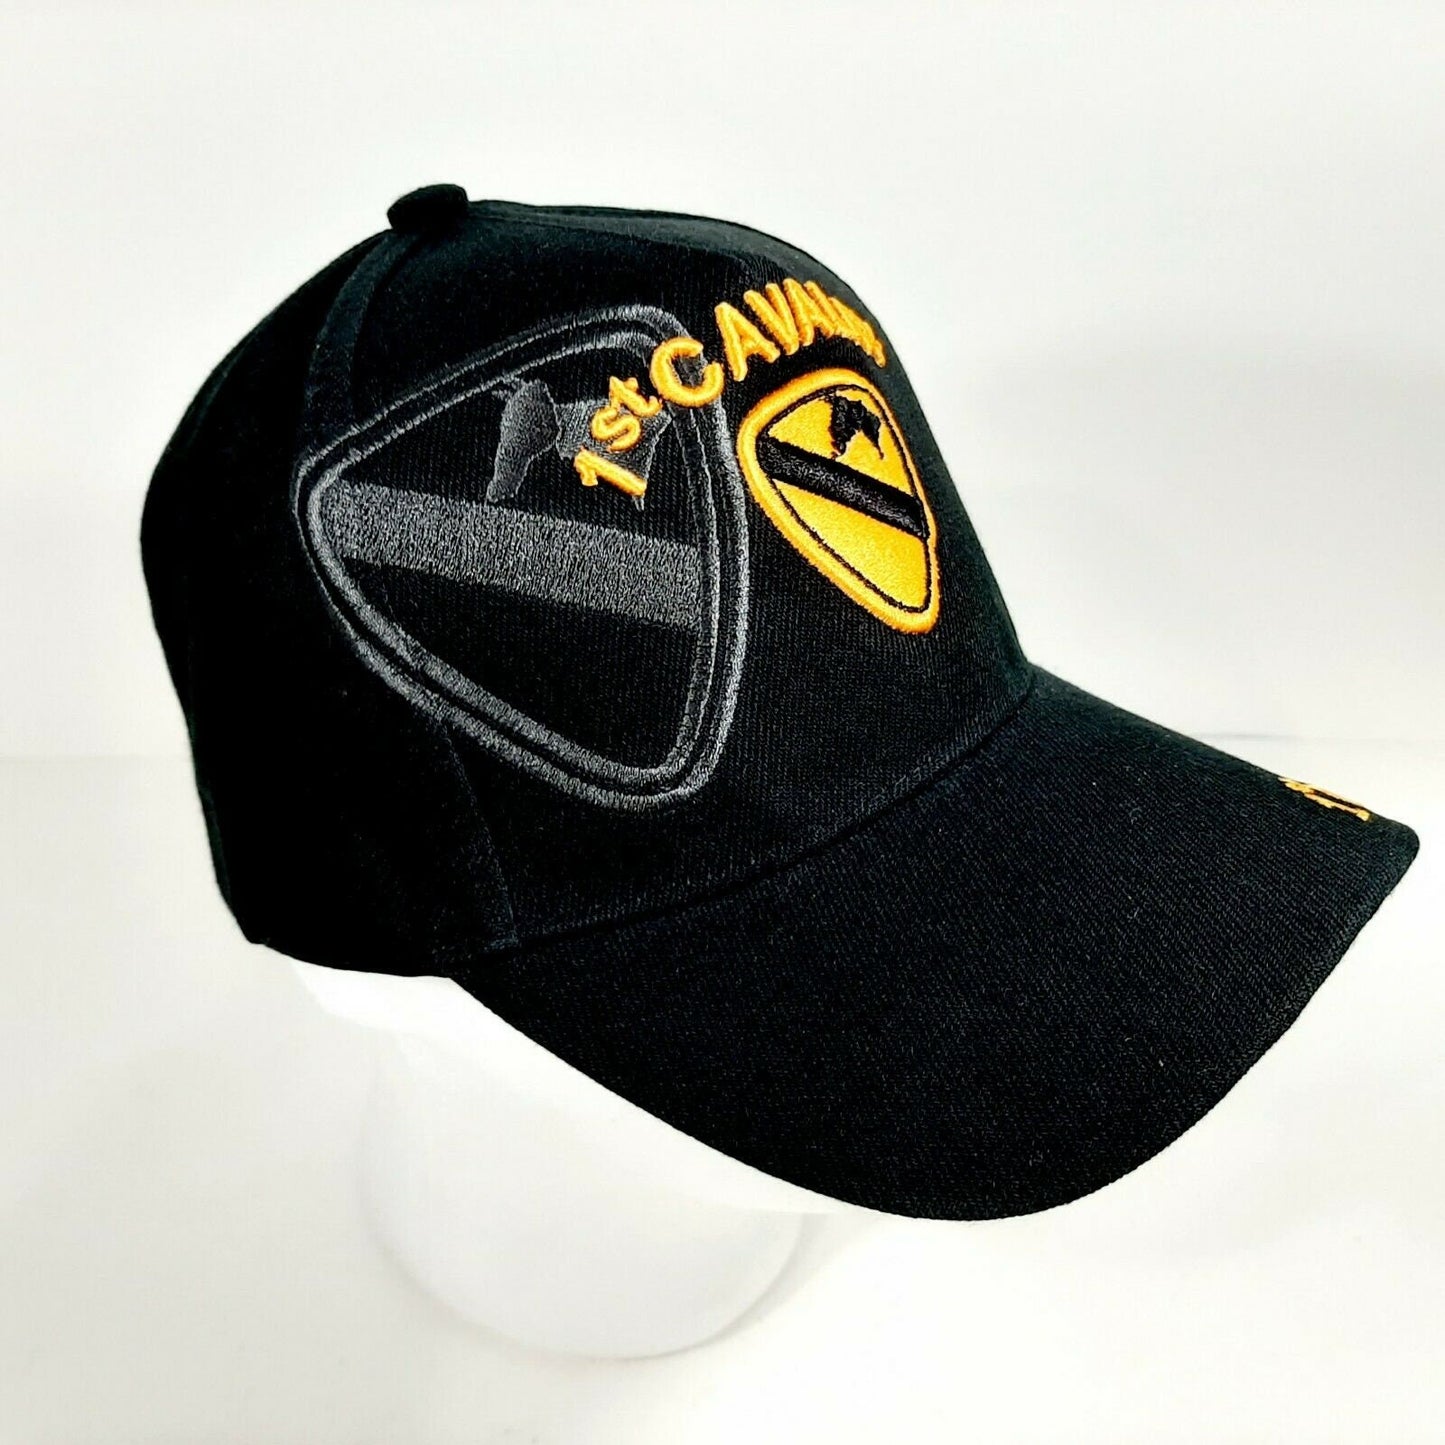 US Army 1st Cavalry Men's Ball Cap Hat Black